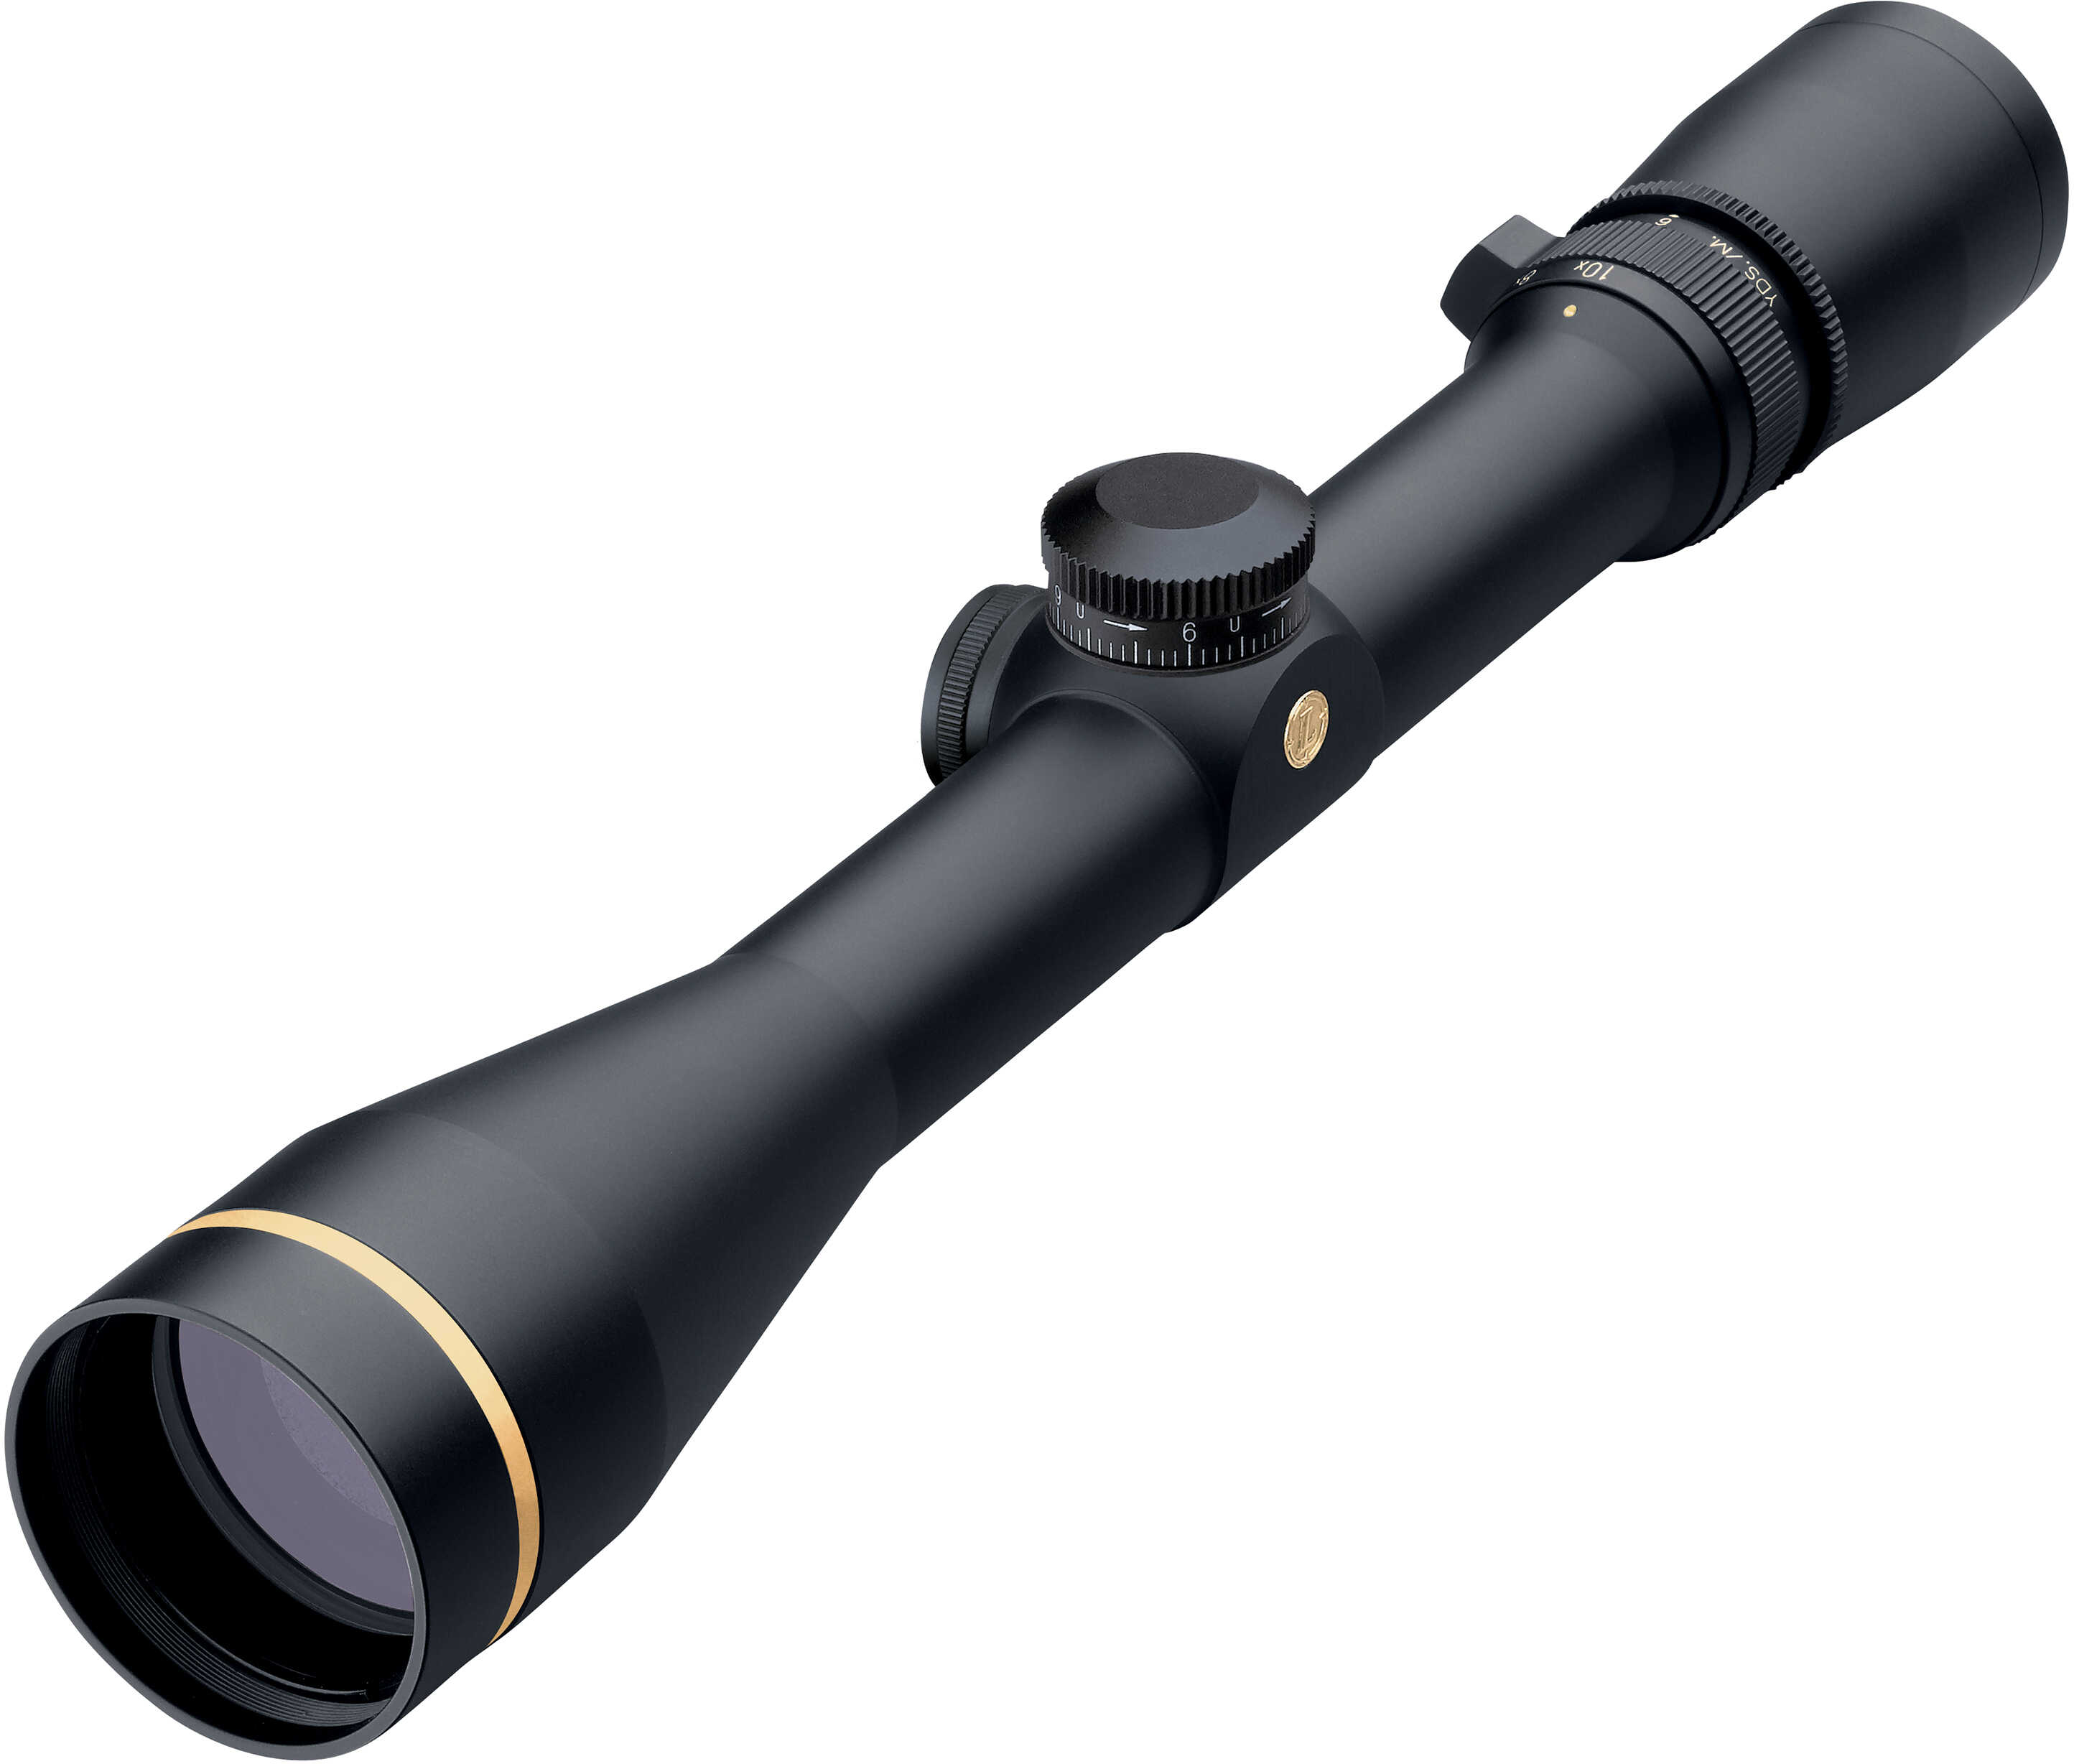 Leupold VX-3i Riflescope 4.5-14x40 mm 1" Tube CDS Wind-Plex Reticle Matte Black Md: 170692